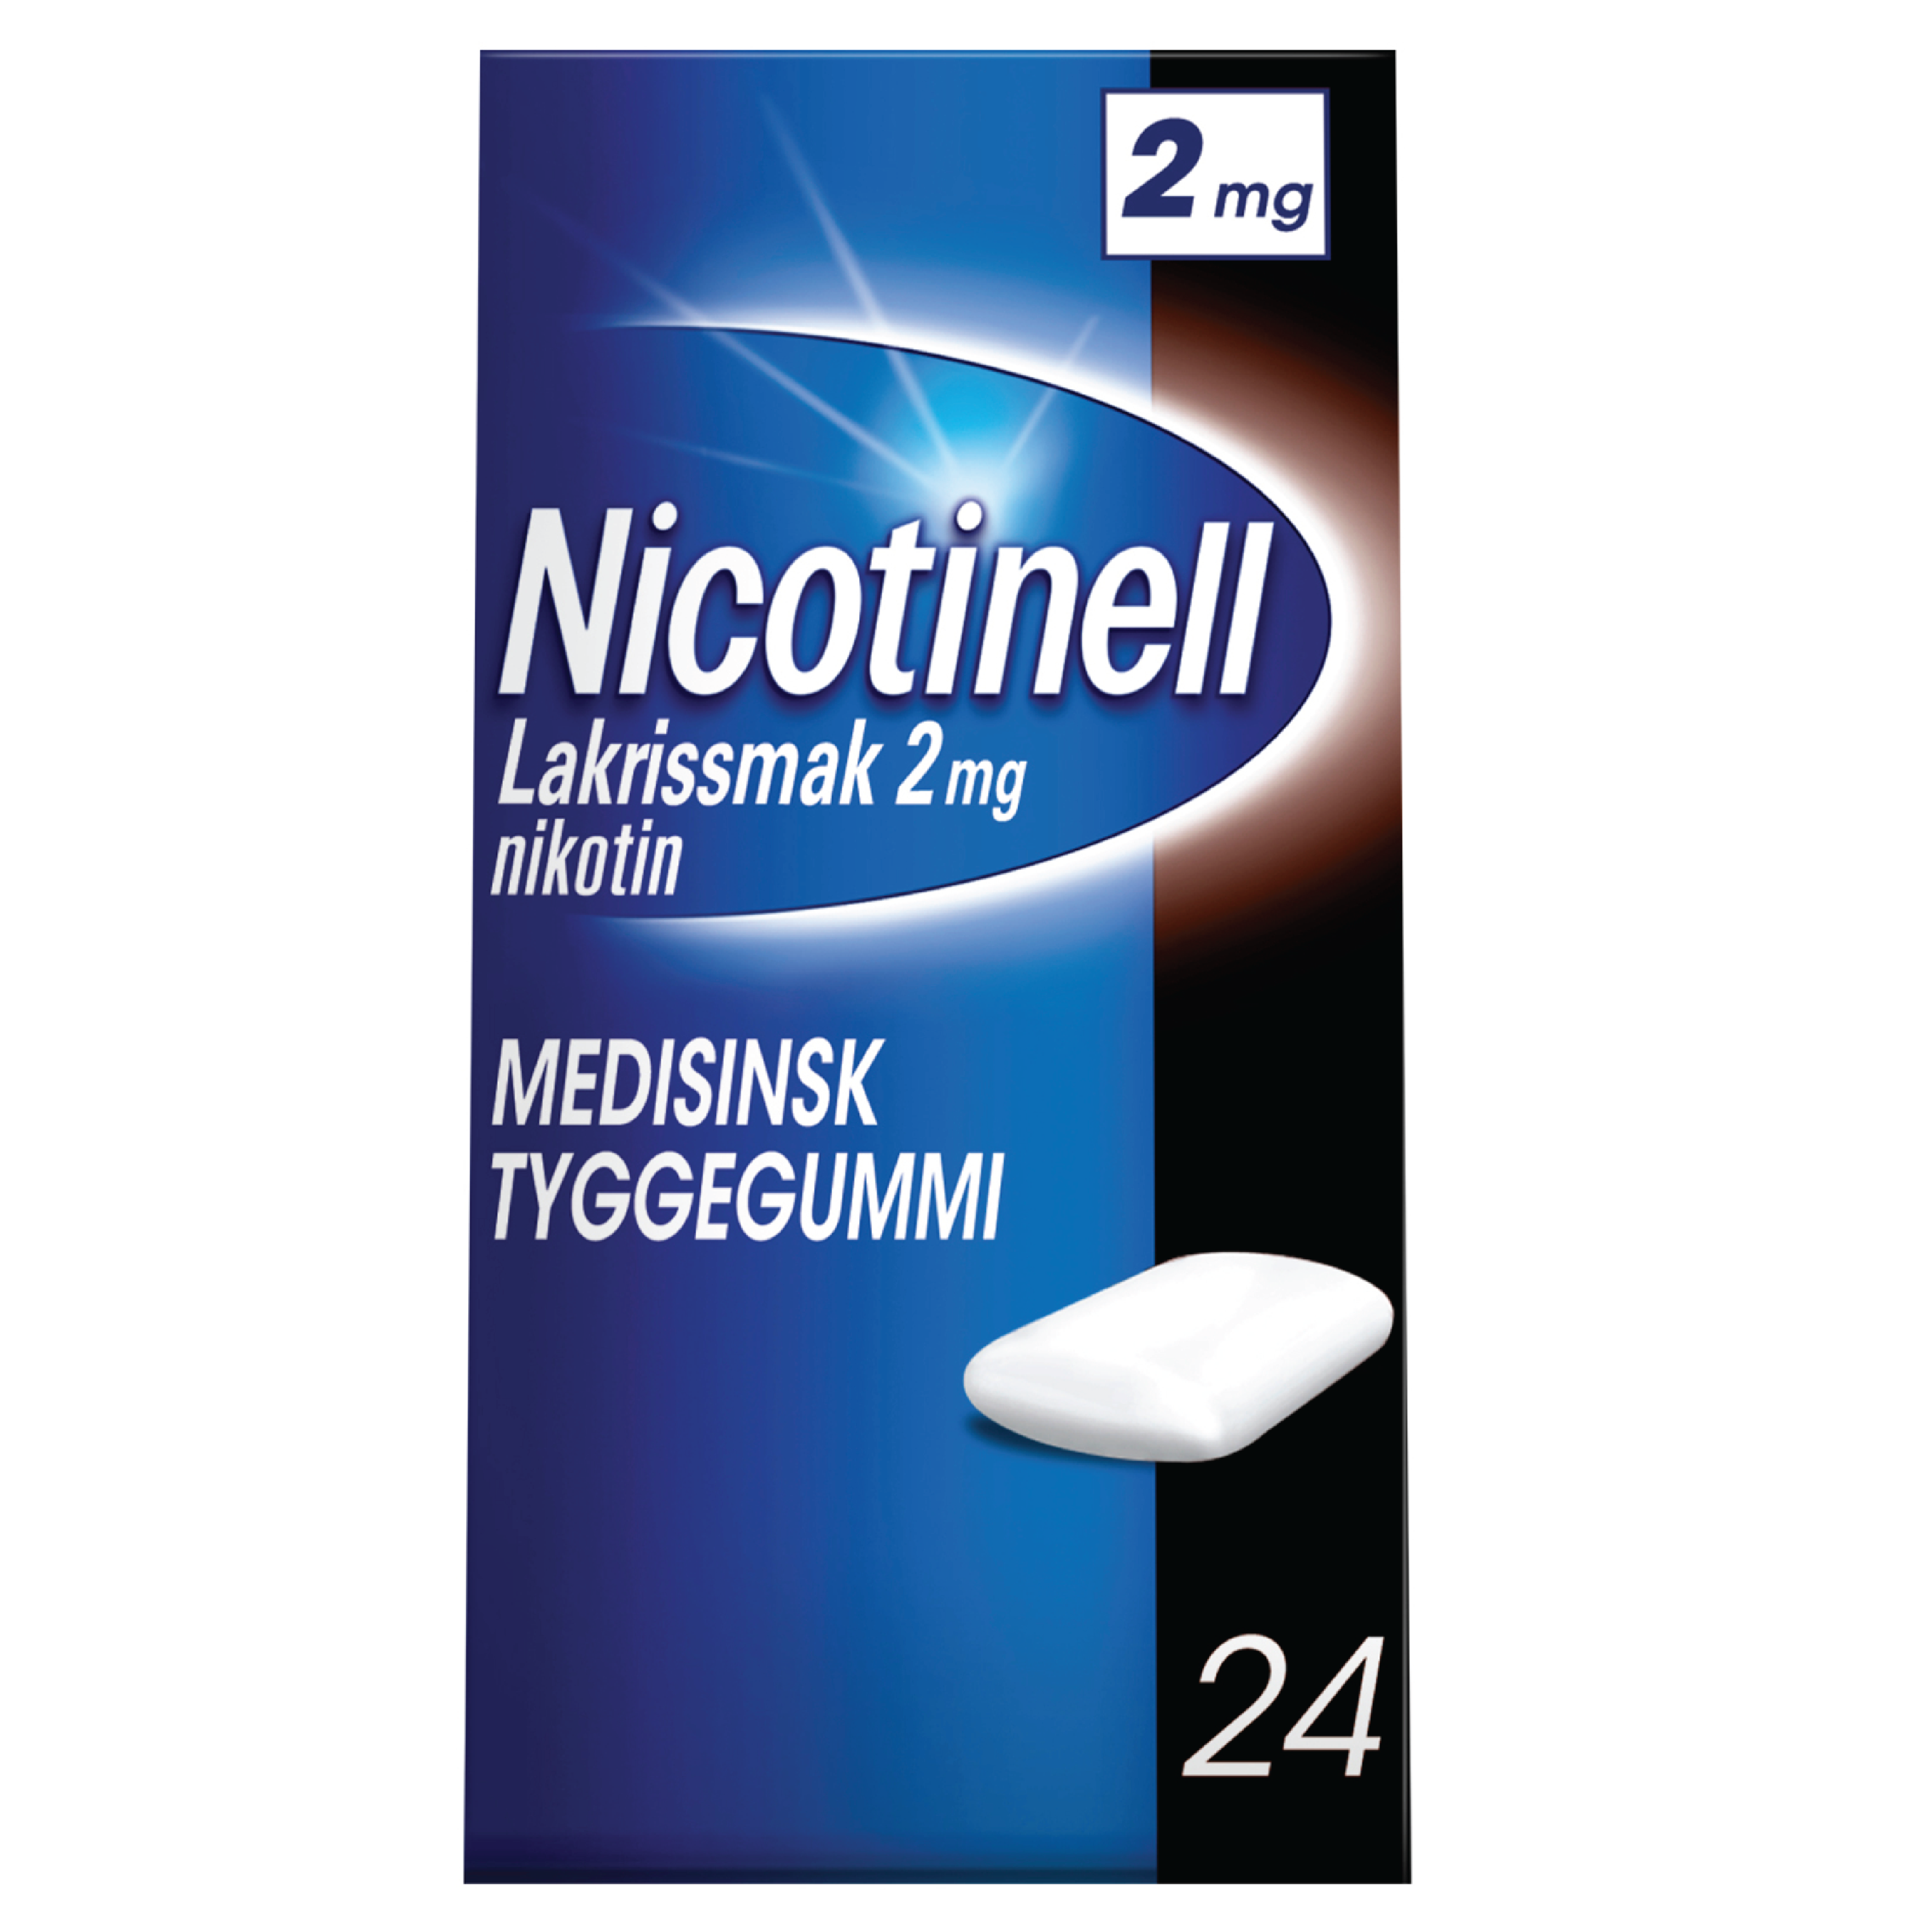 Nicotinell Tyggegummi 2mg lakris, Slutte å røyke, 24 stk.